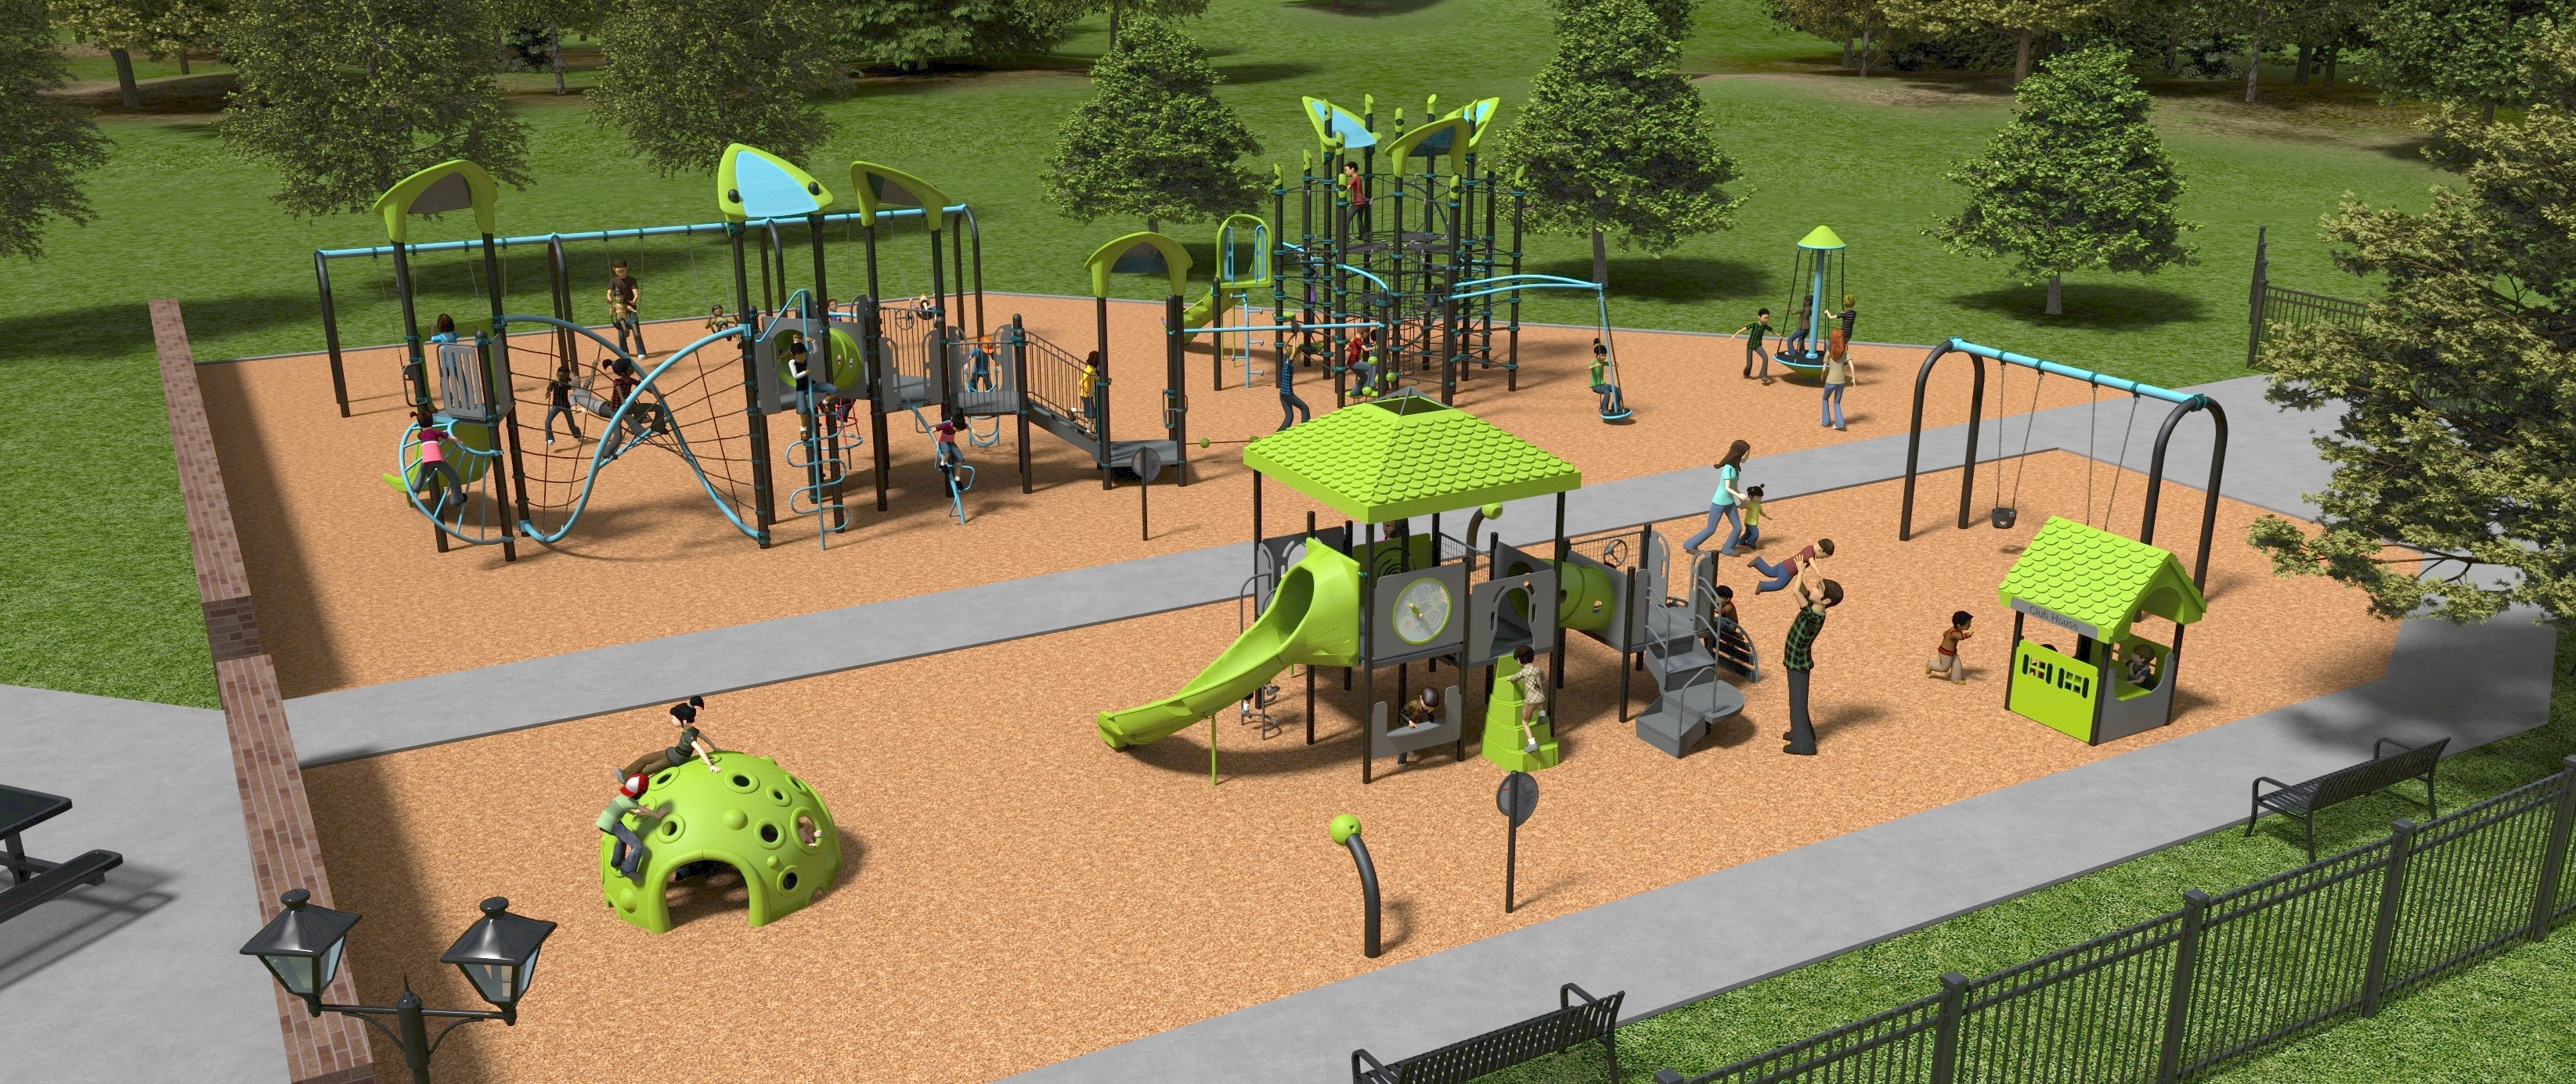 Landscape Structures Playground 3D Rendering 